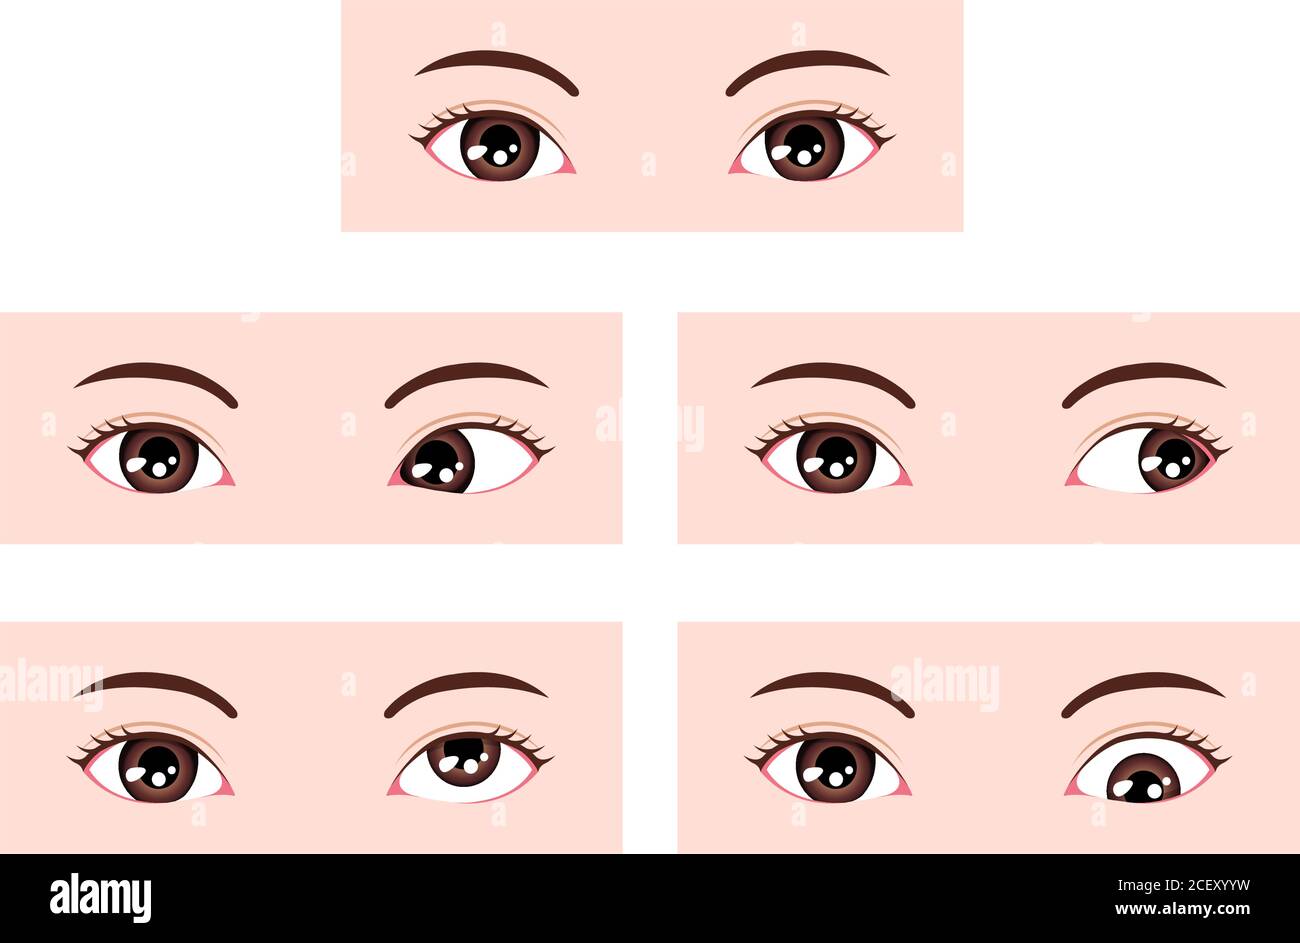 Types of strabismus vector illustration Stock Vector